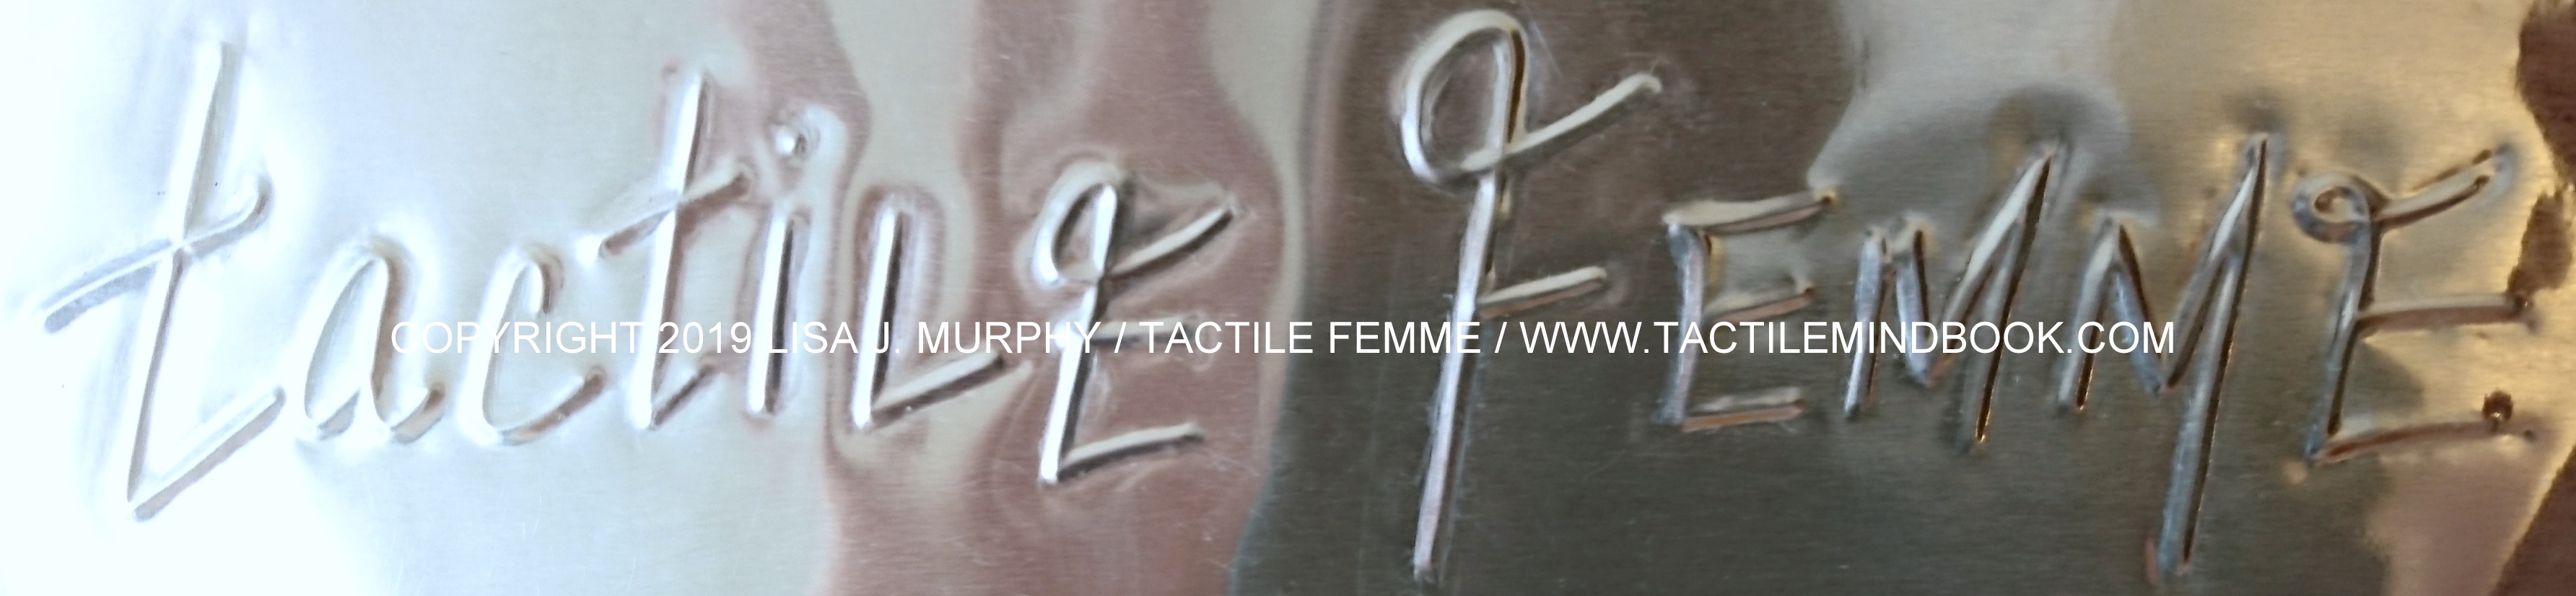 tactile femme title by Lisa J. Murphy